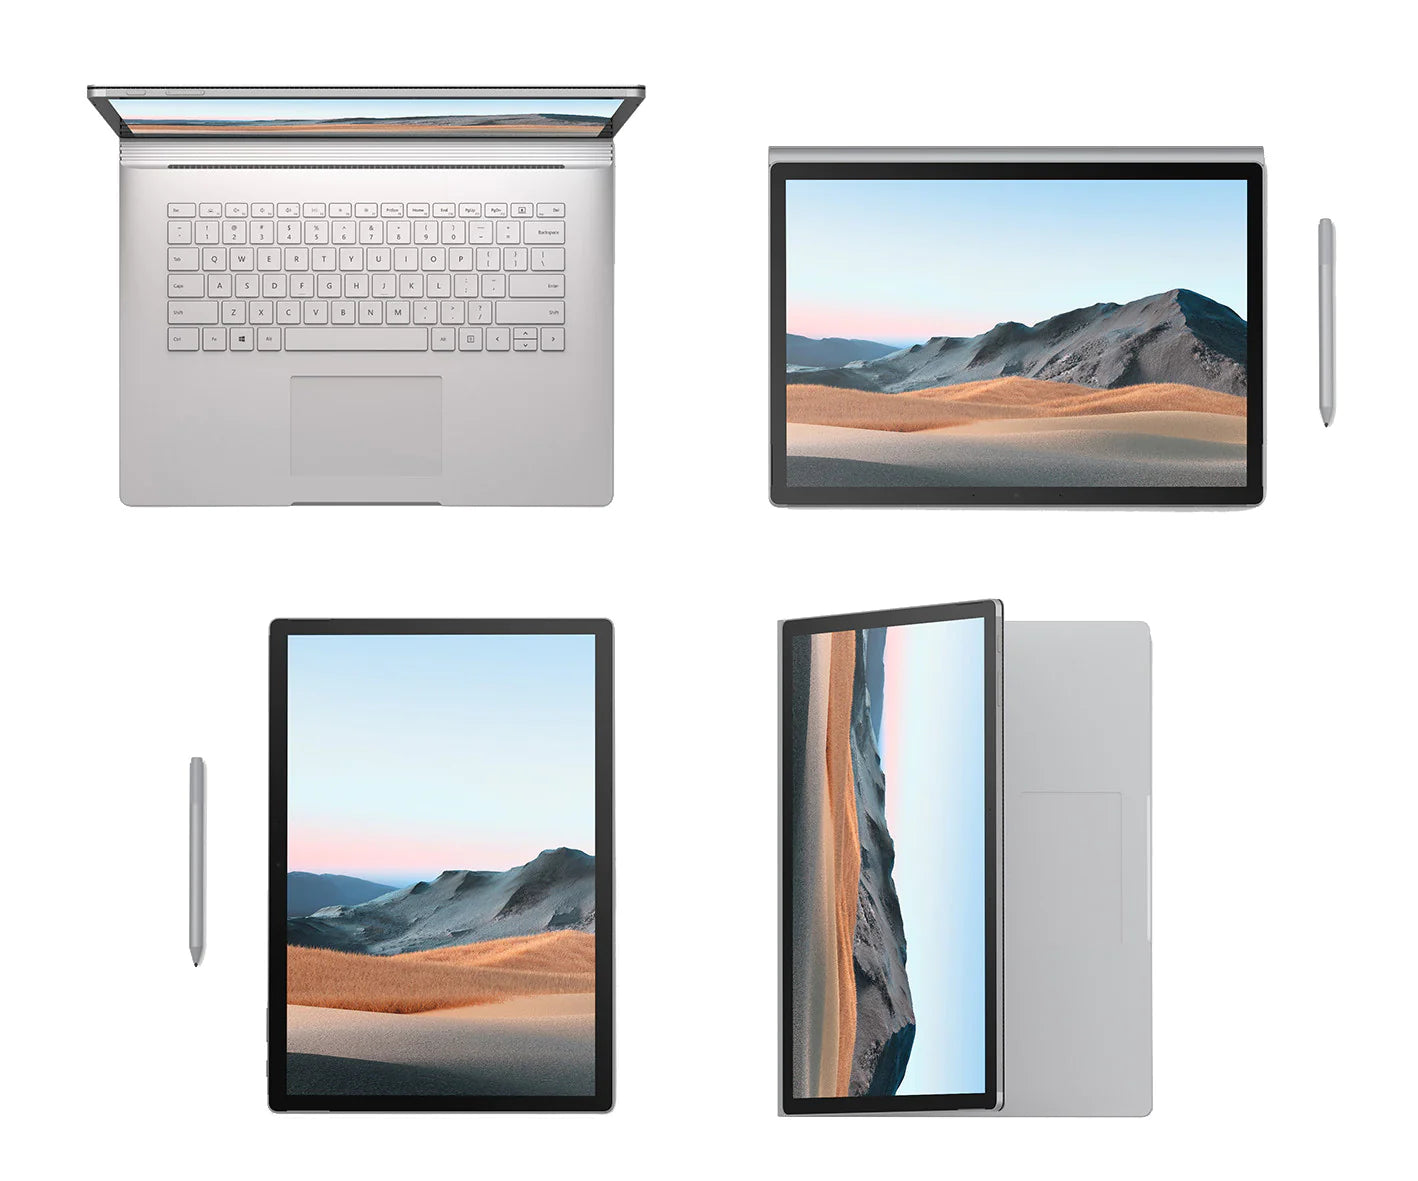 Microsoft Surface Book 3 i7-1065G7/32GB/512SSD/GTX1660Ti Max-Q/15/Touch/W10 Home Platinum Open Box